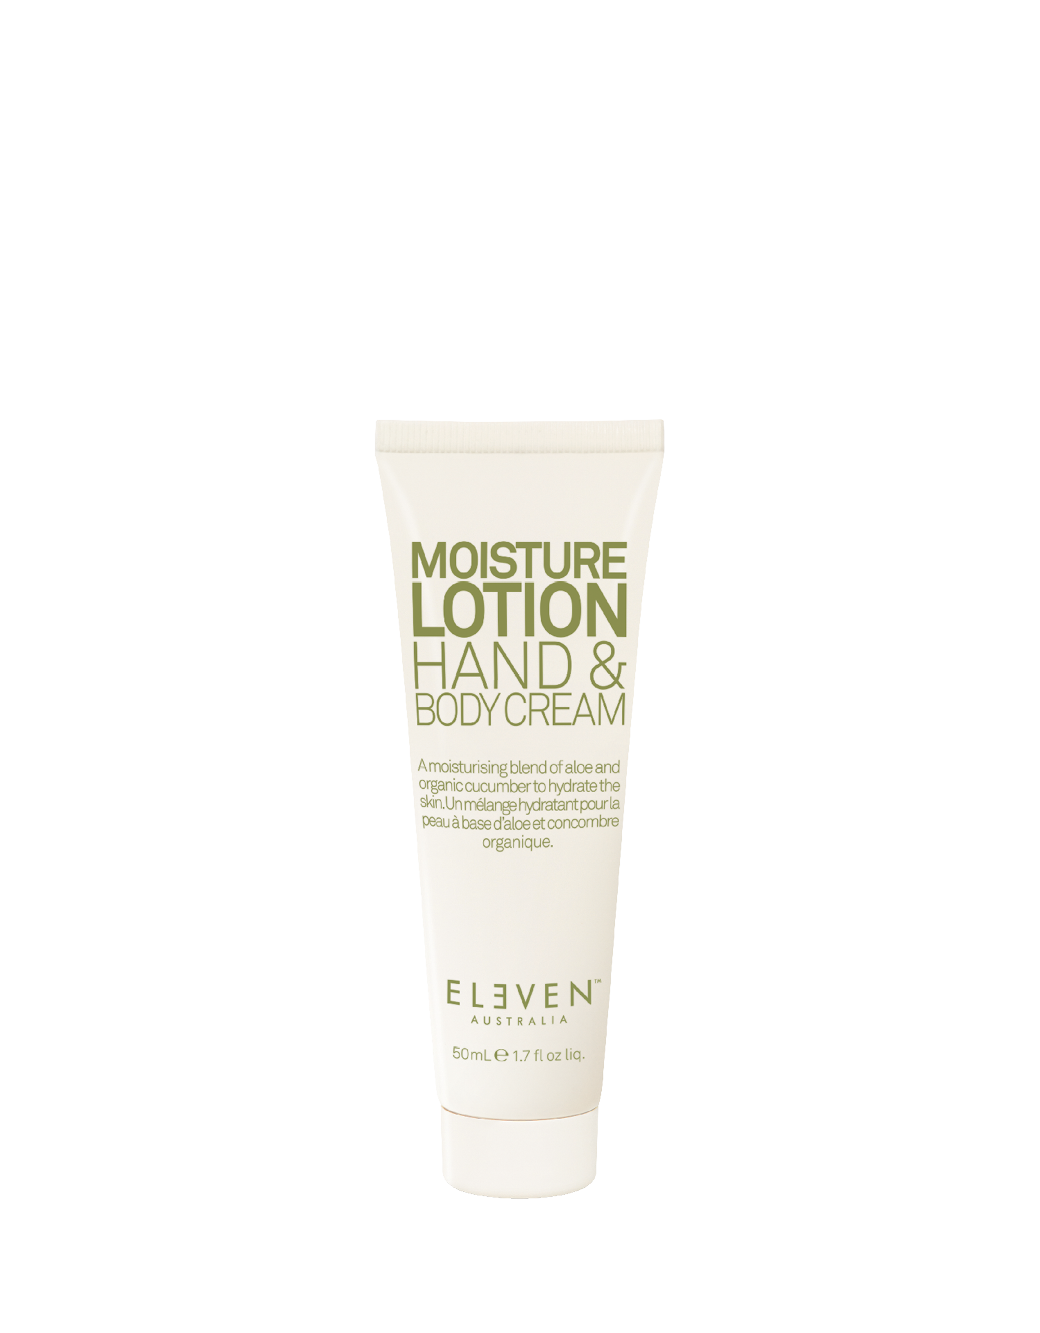 Moisture Lotion Hand & Body Cream Travel Size 50ml